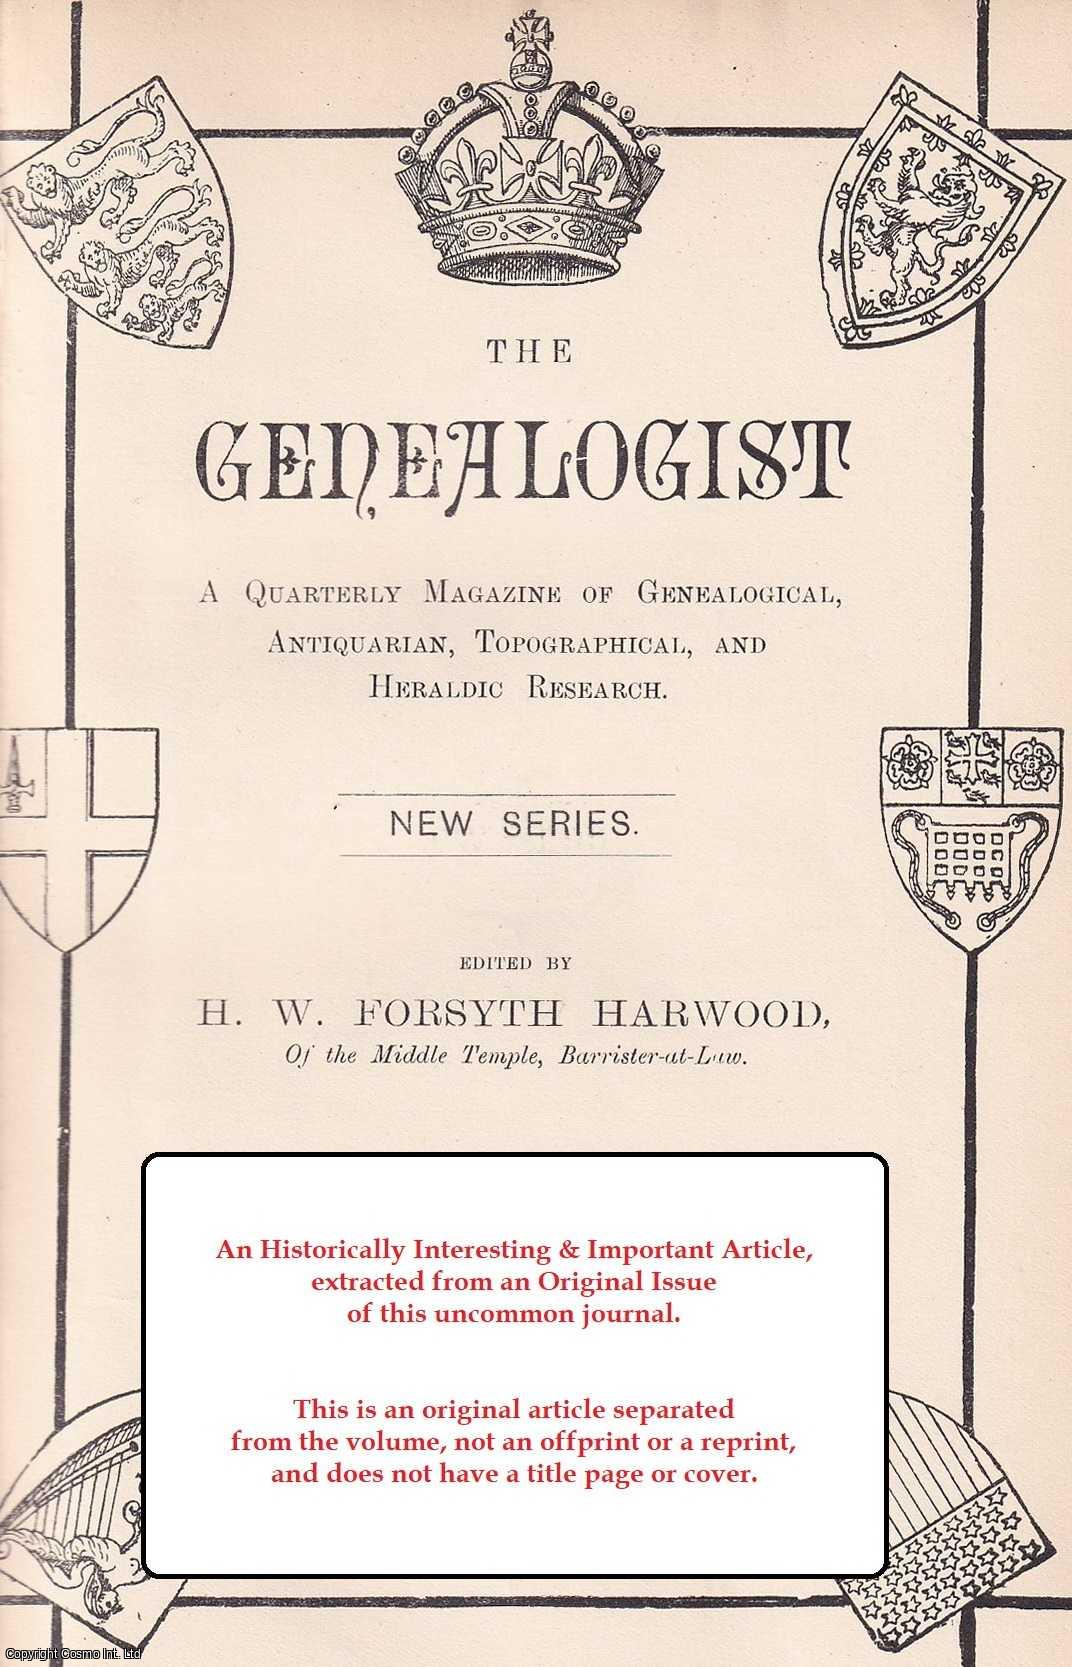 W. H. B. B. - Beningworth of Beningworth. An original article from The Genealogist, 1898.